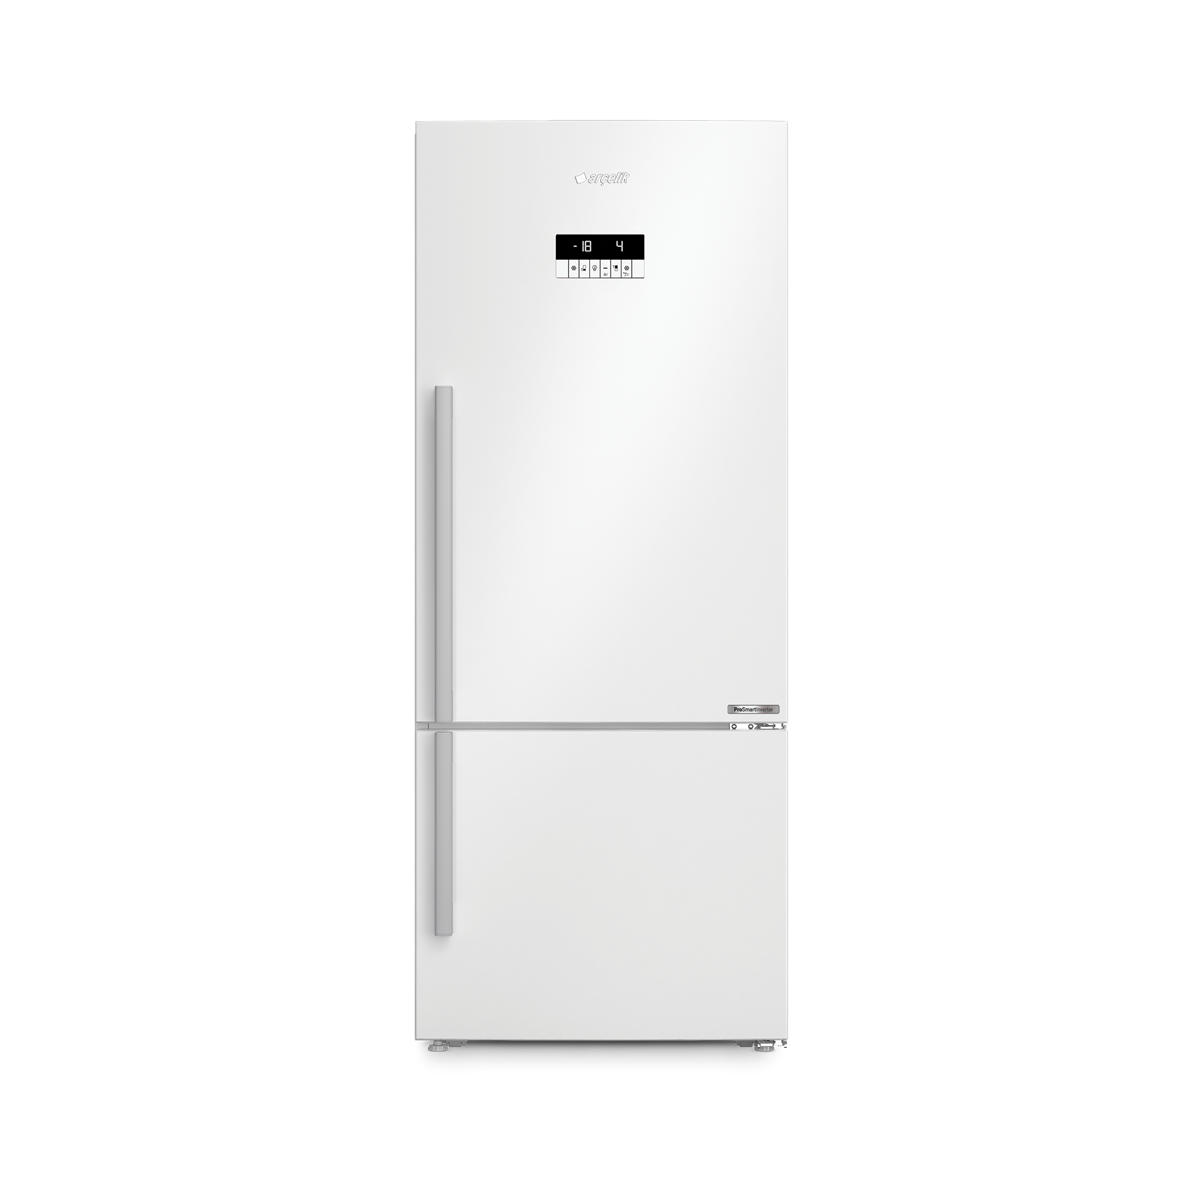 Arçelik 274581 EB No Frost Buzdolabı - Arçelik Beyaz Eşya